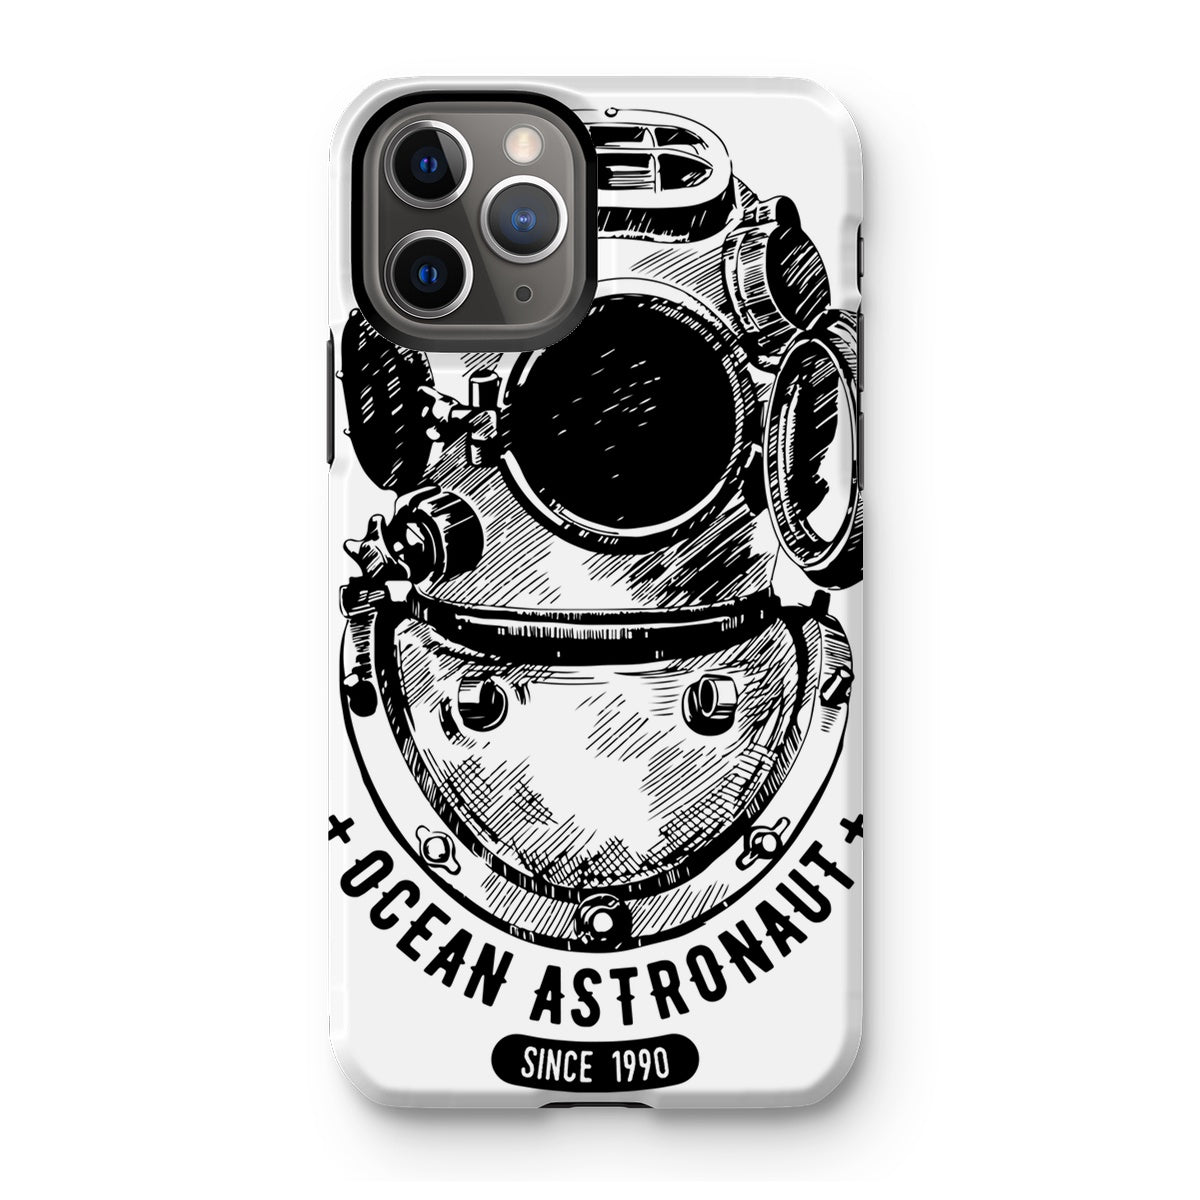 AQUA B&W - 05 - Ocean astronaut - Tough Phone Case